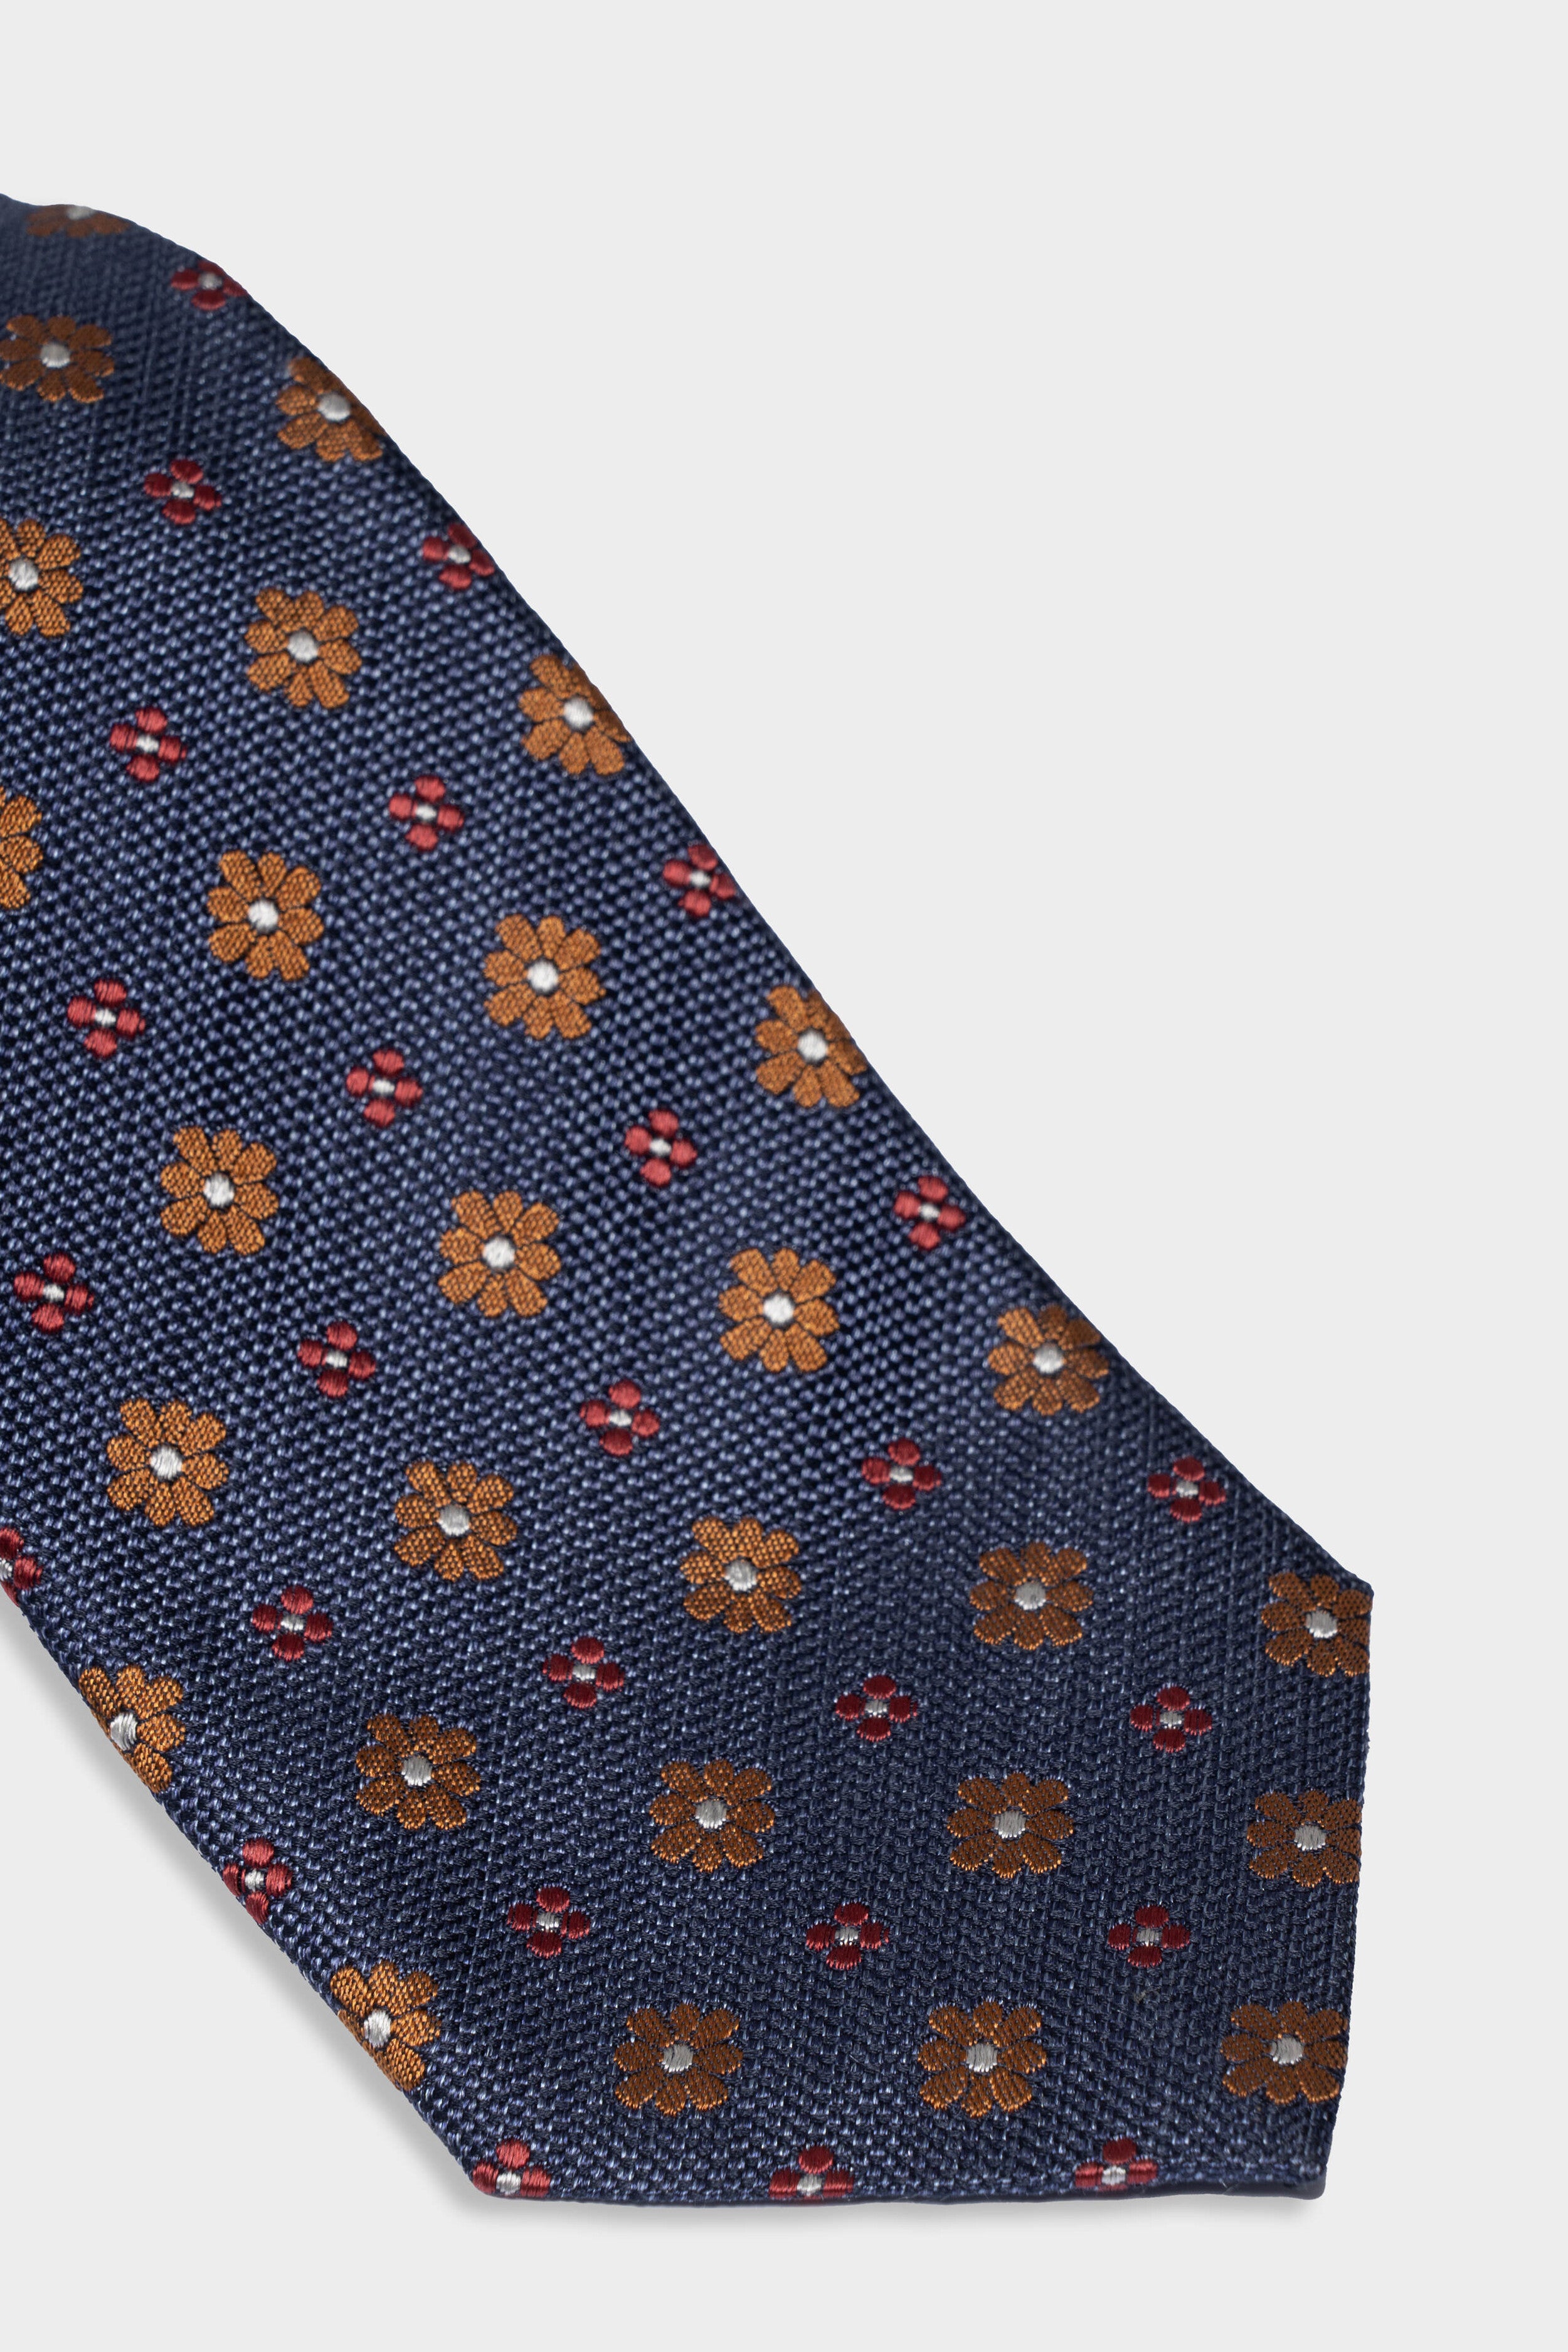 Blue patterned tie - Blue-Burgundy pattern